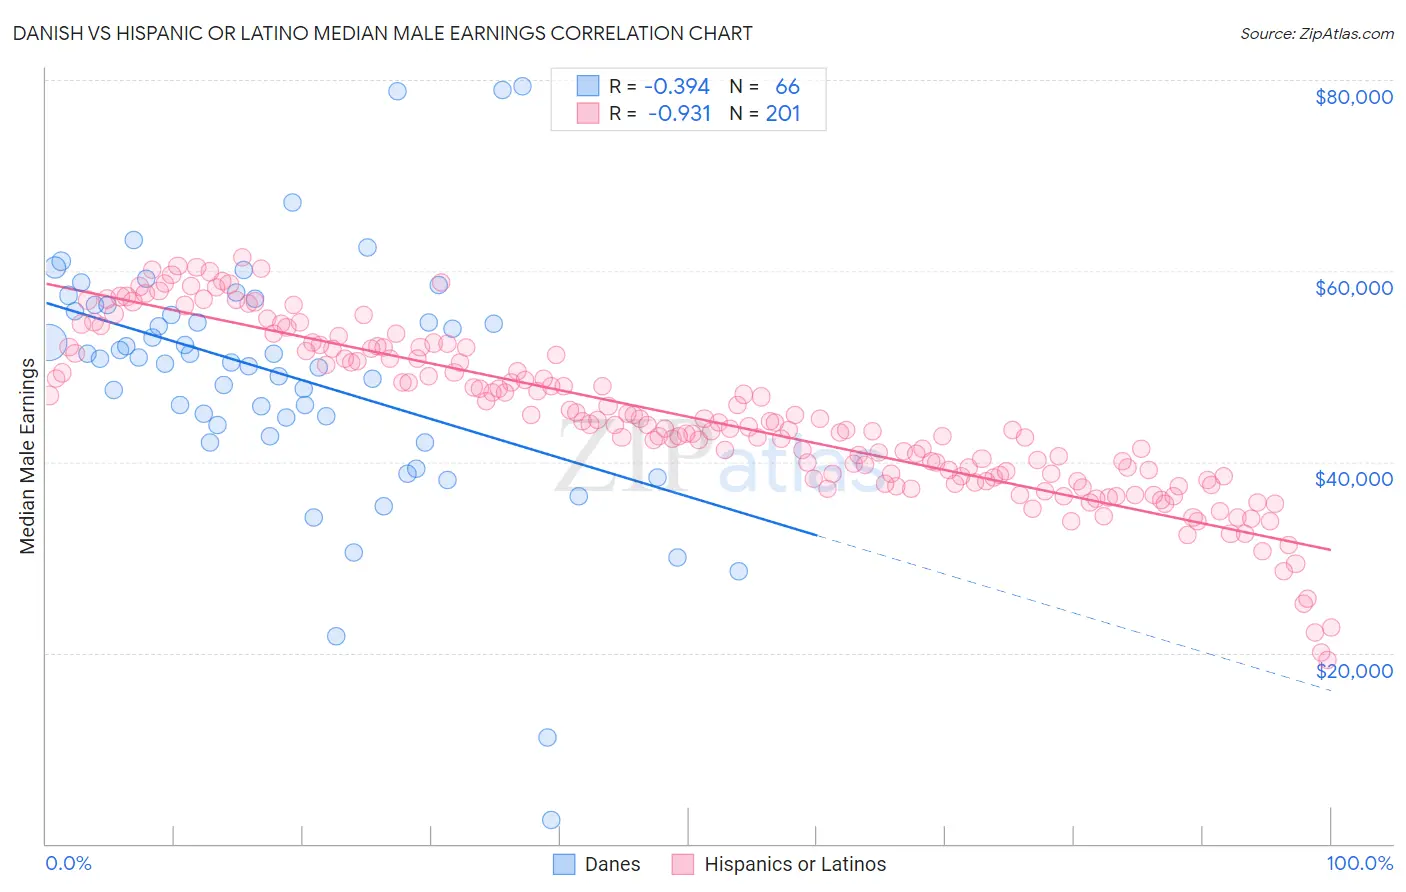 Danish vs Hispanic or Latino Median Male Earnings